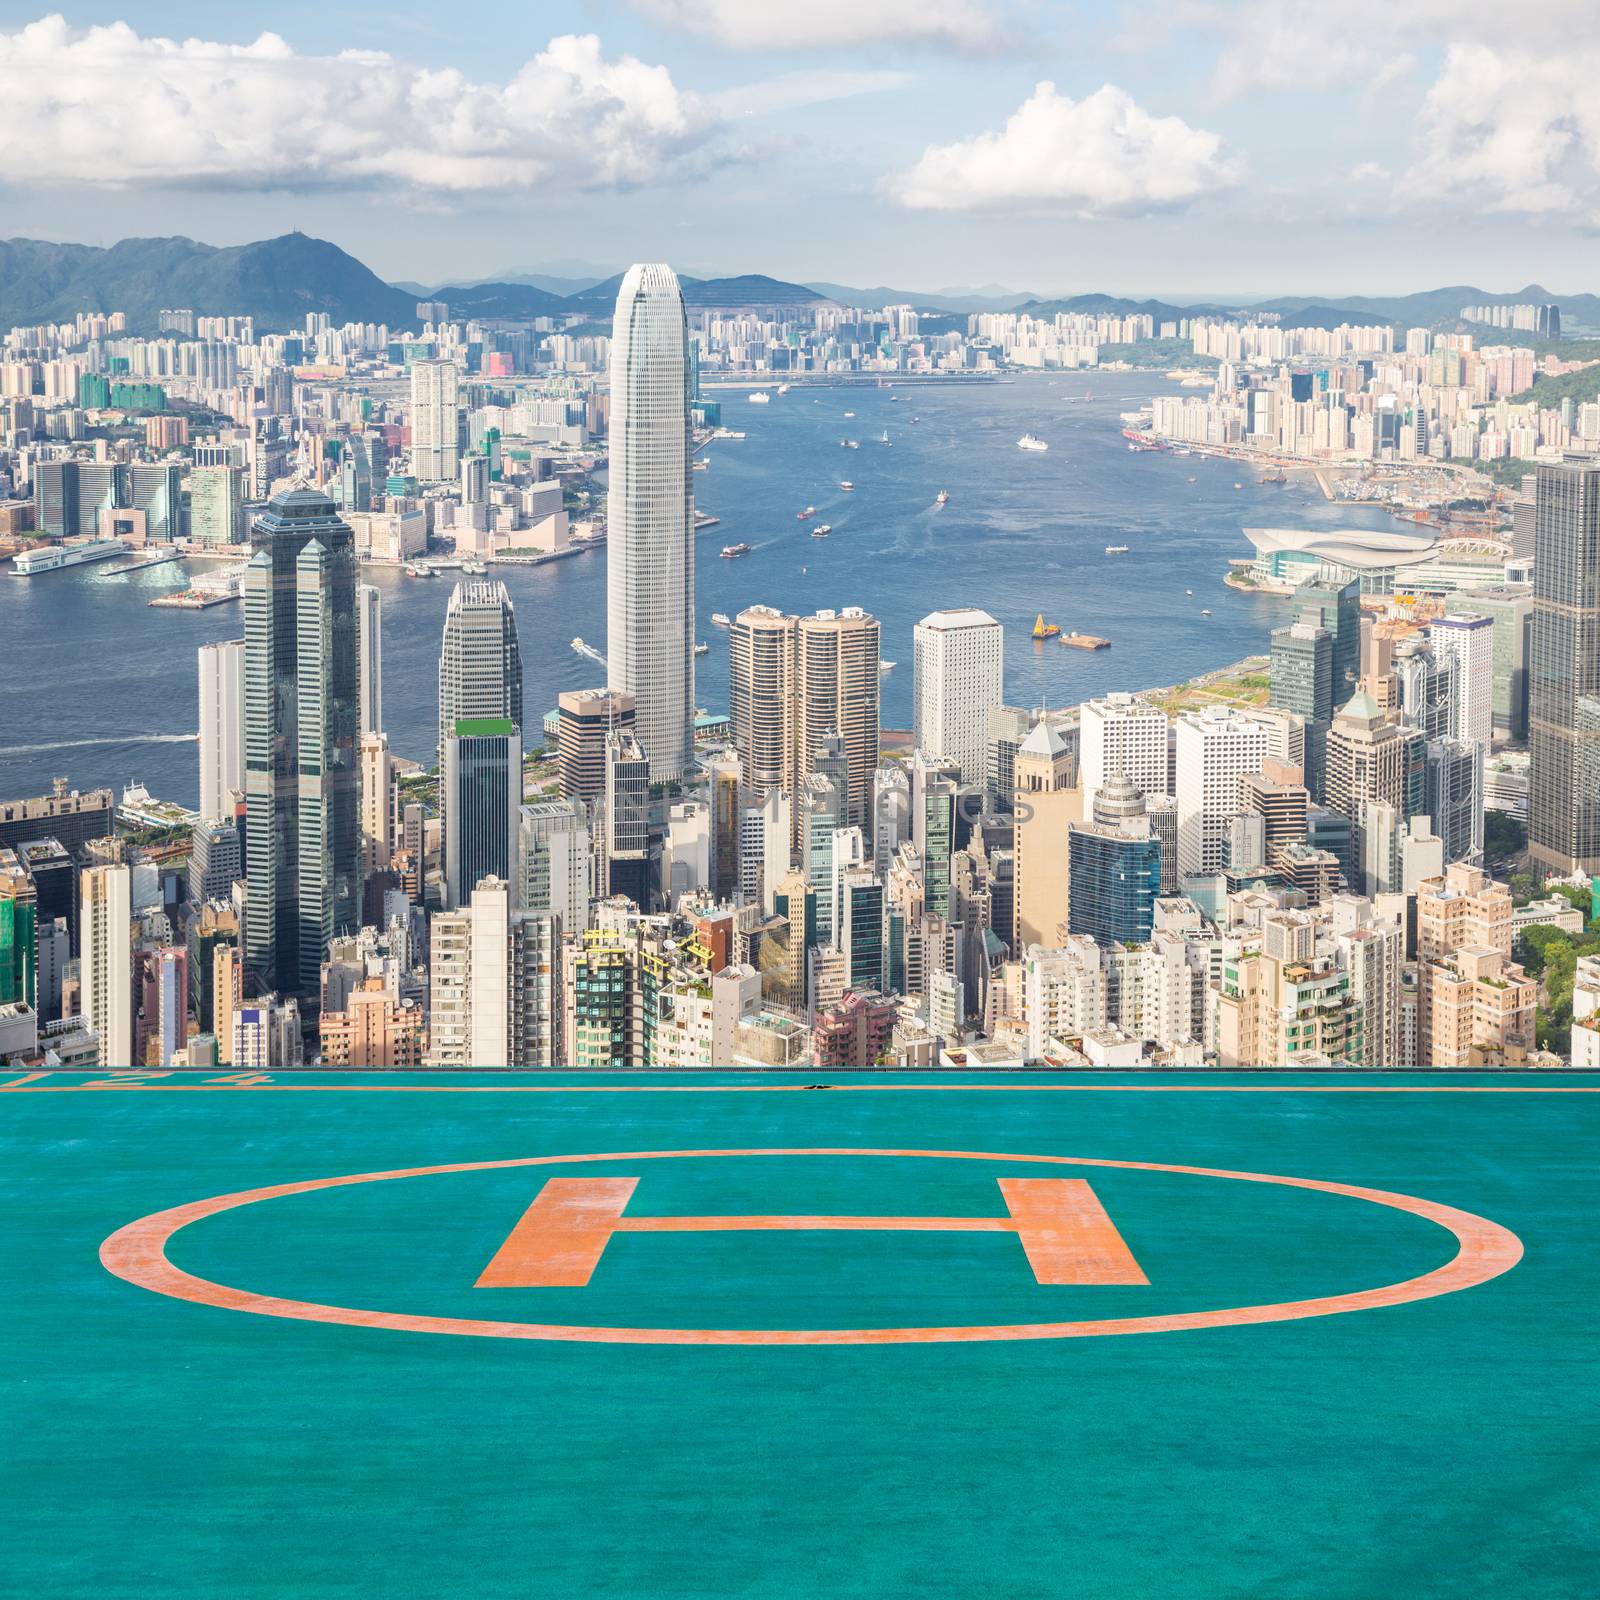 Hong Kong Skyline helipad by vichie81